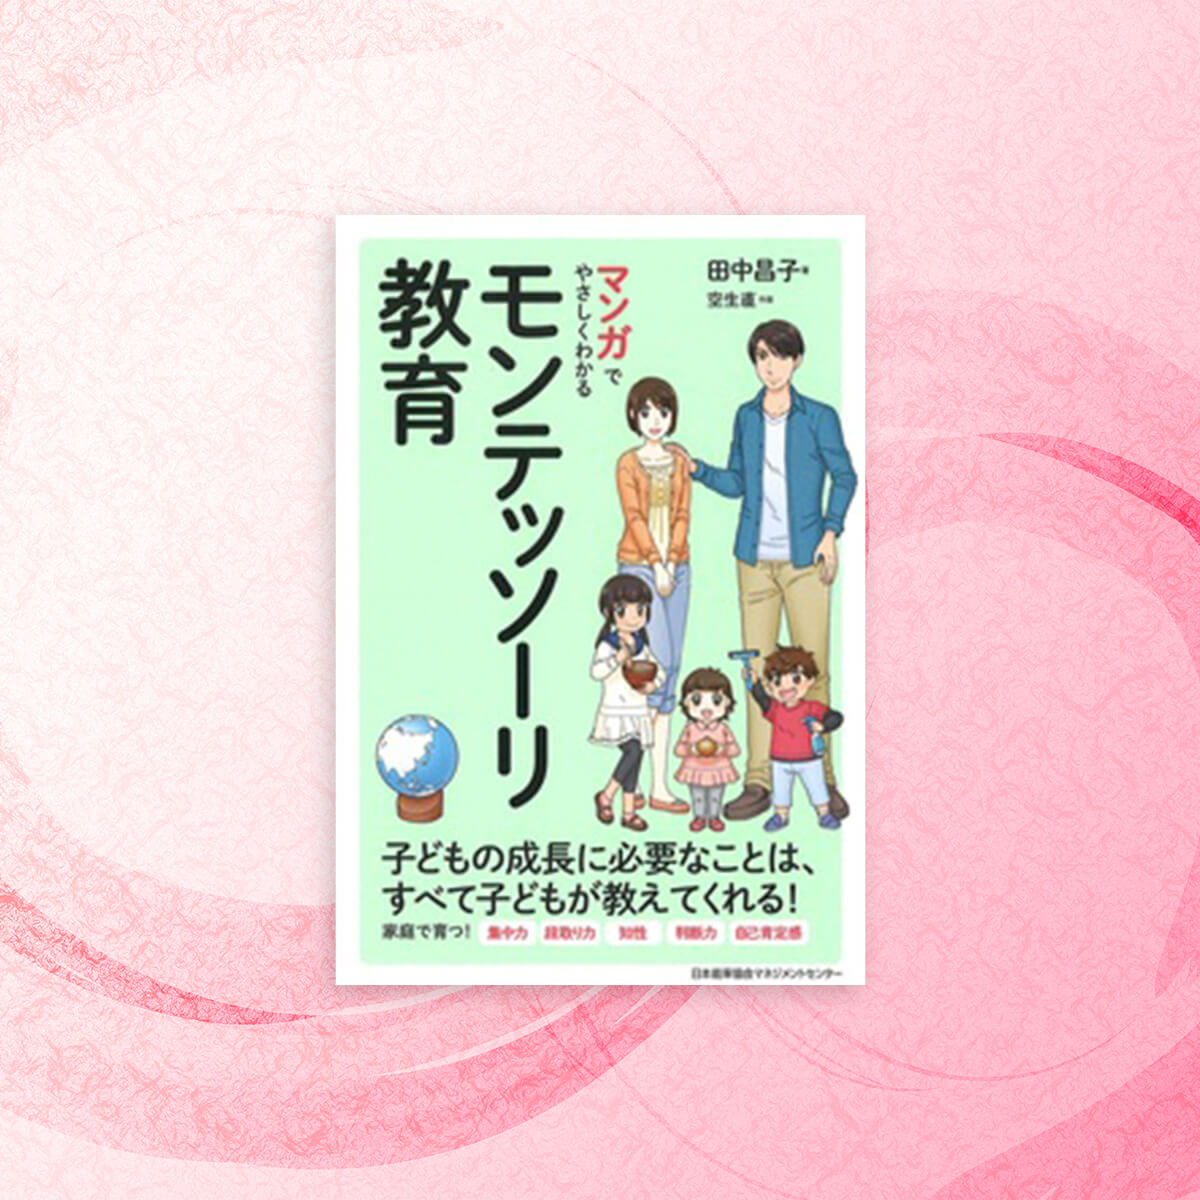 Easy Reading through Manga | Montessori Method